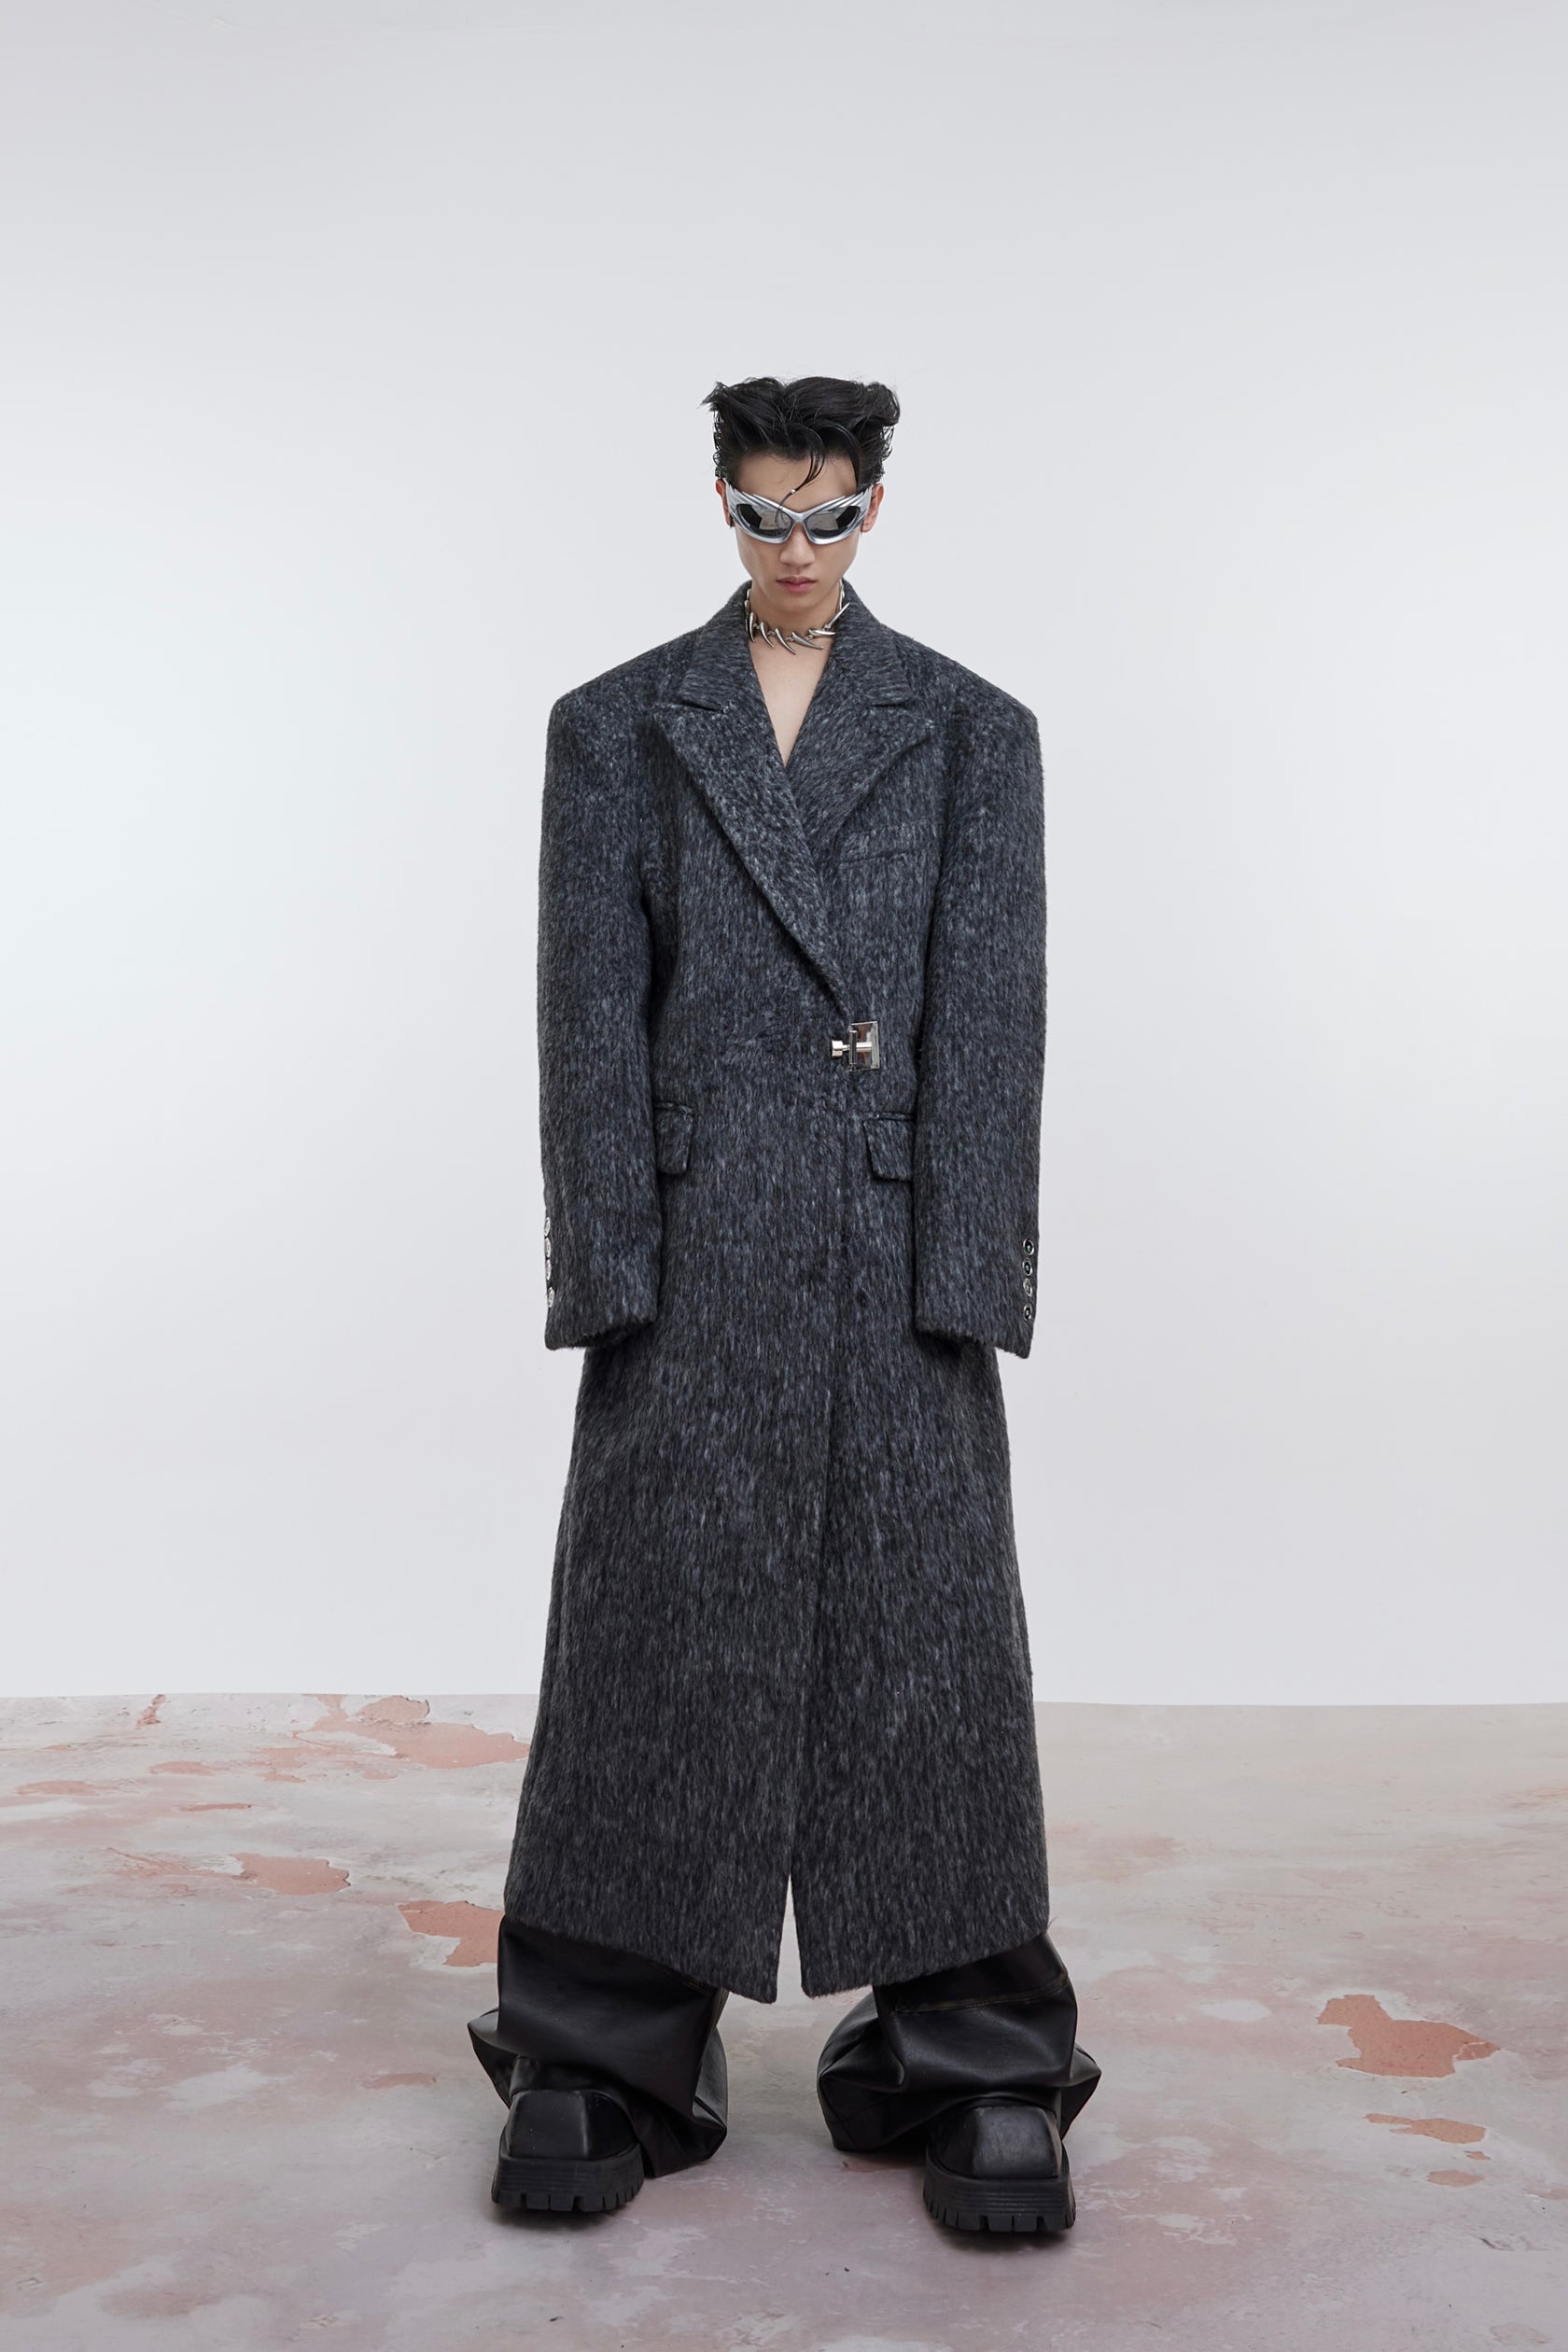 Elegance Redefined: Long Wool Coat for Timeless Style – ArtsKoreanMan